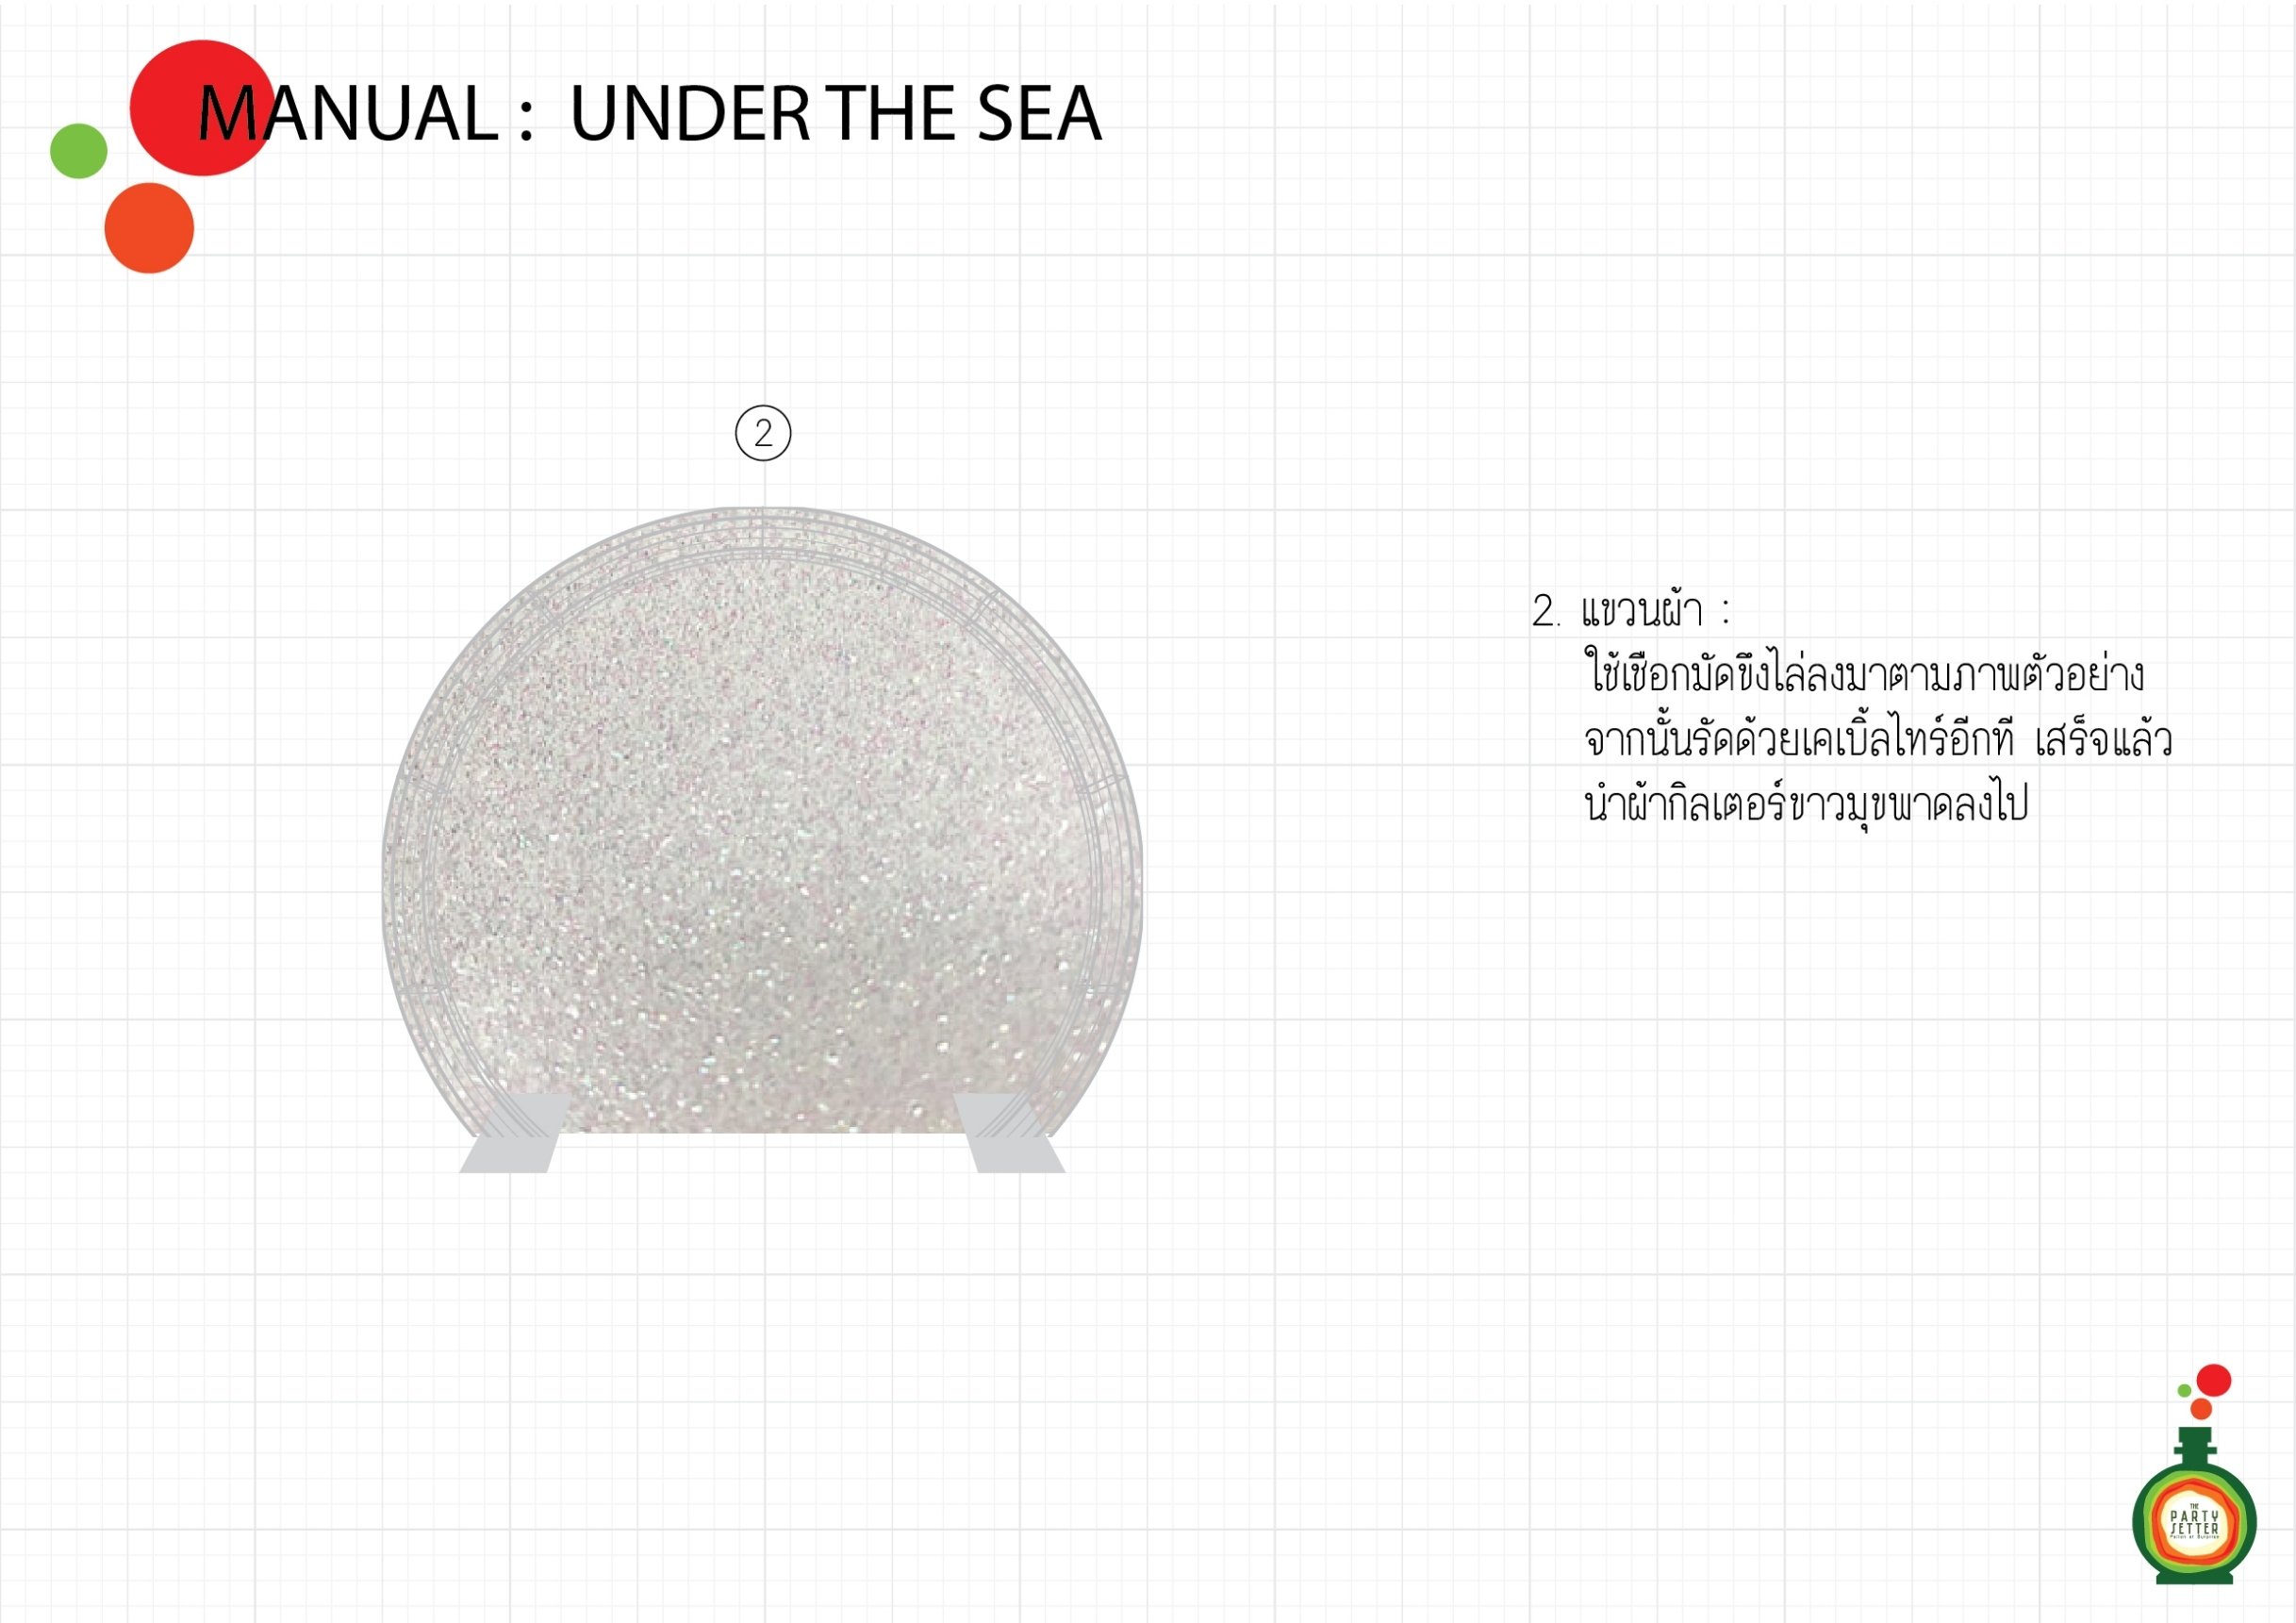 Manual_Under the Sea-02-01.jpg